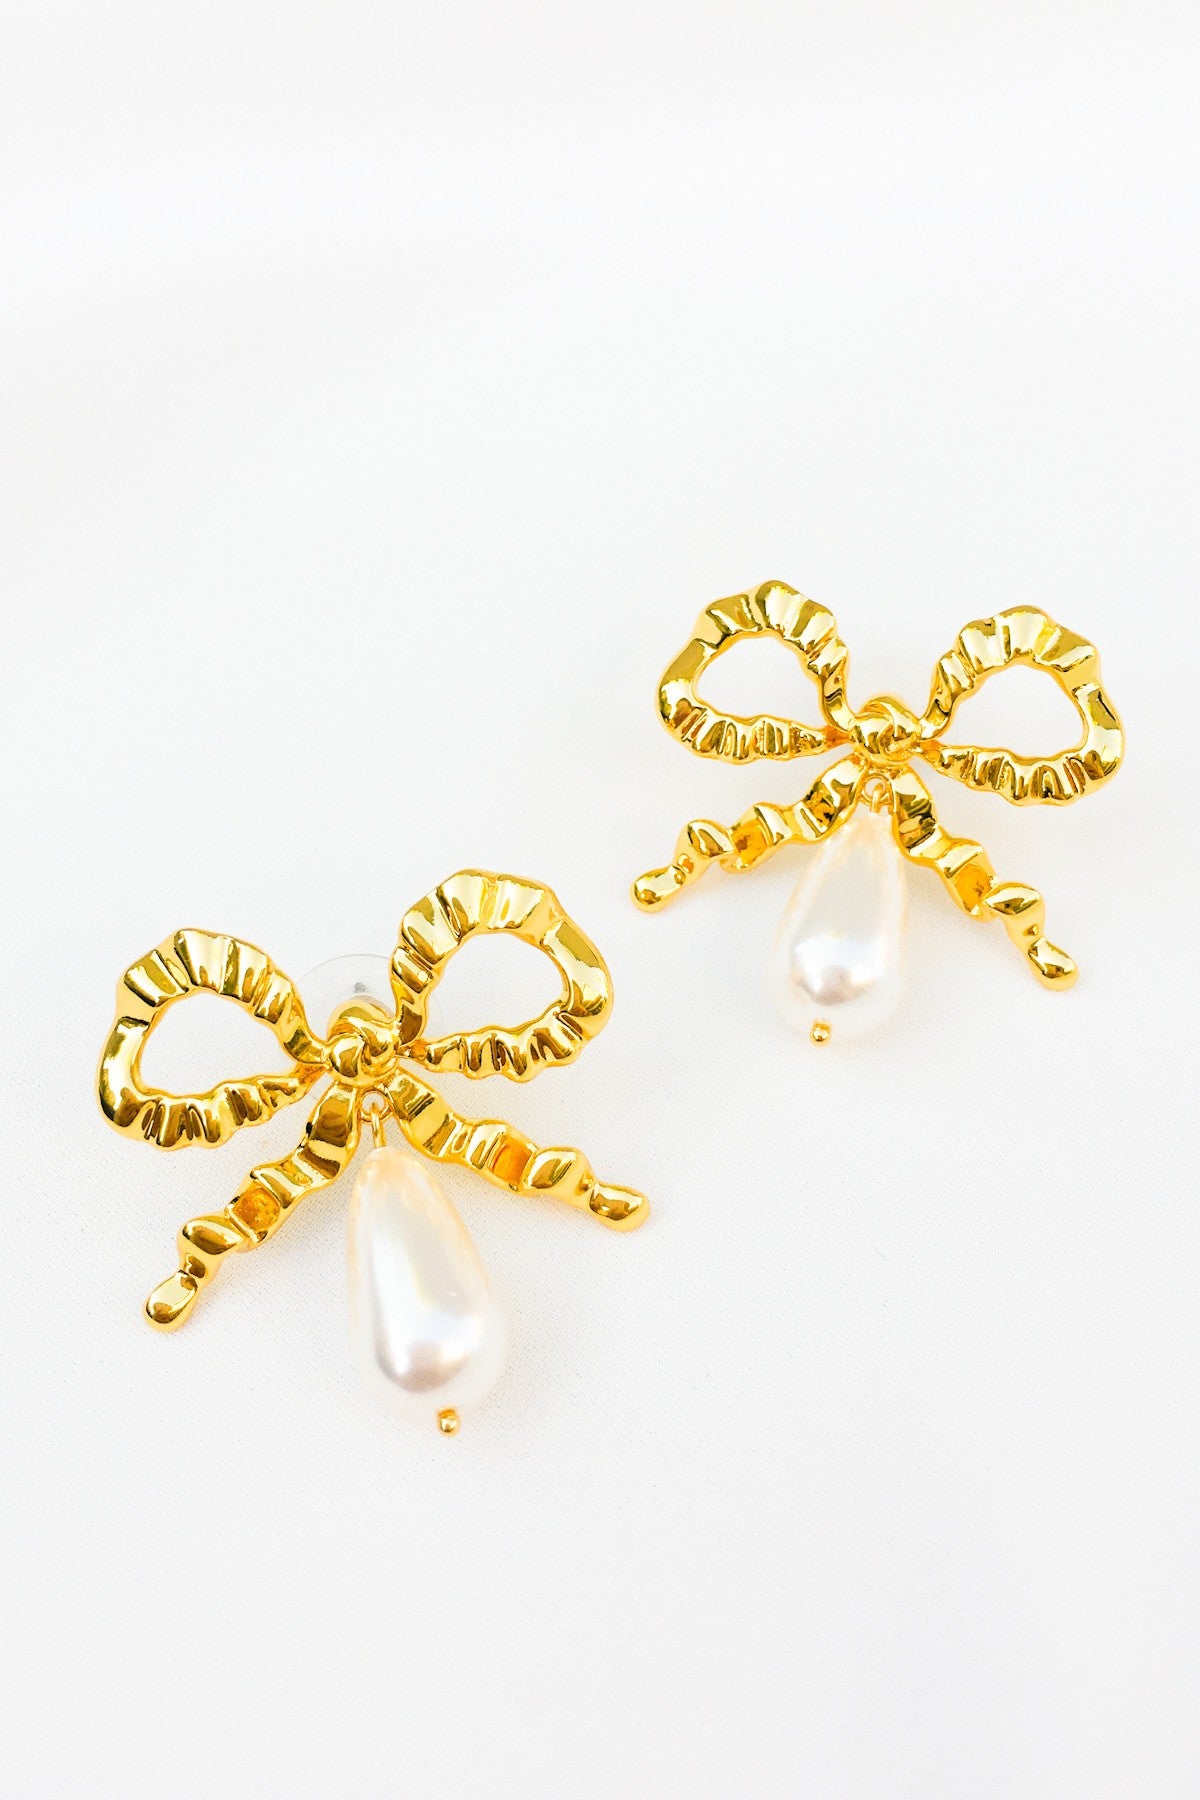 SKYE San Francisco SF California shop ethical sustainable modern chic designer women jewelry Anissa 18K Gold Bow Earrings 2